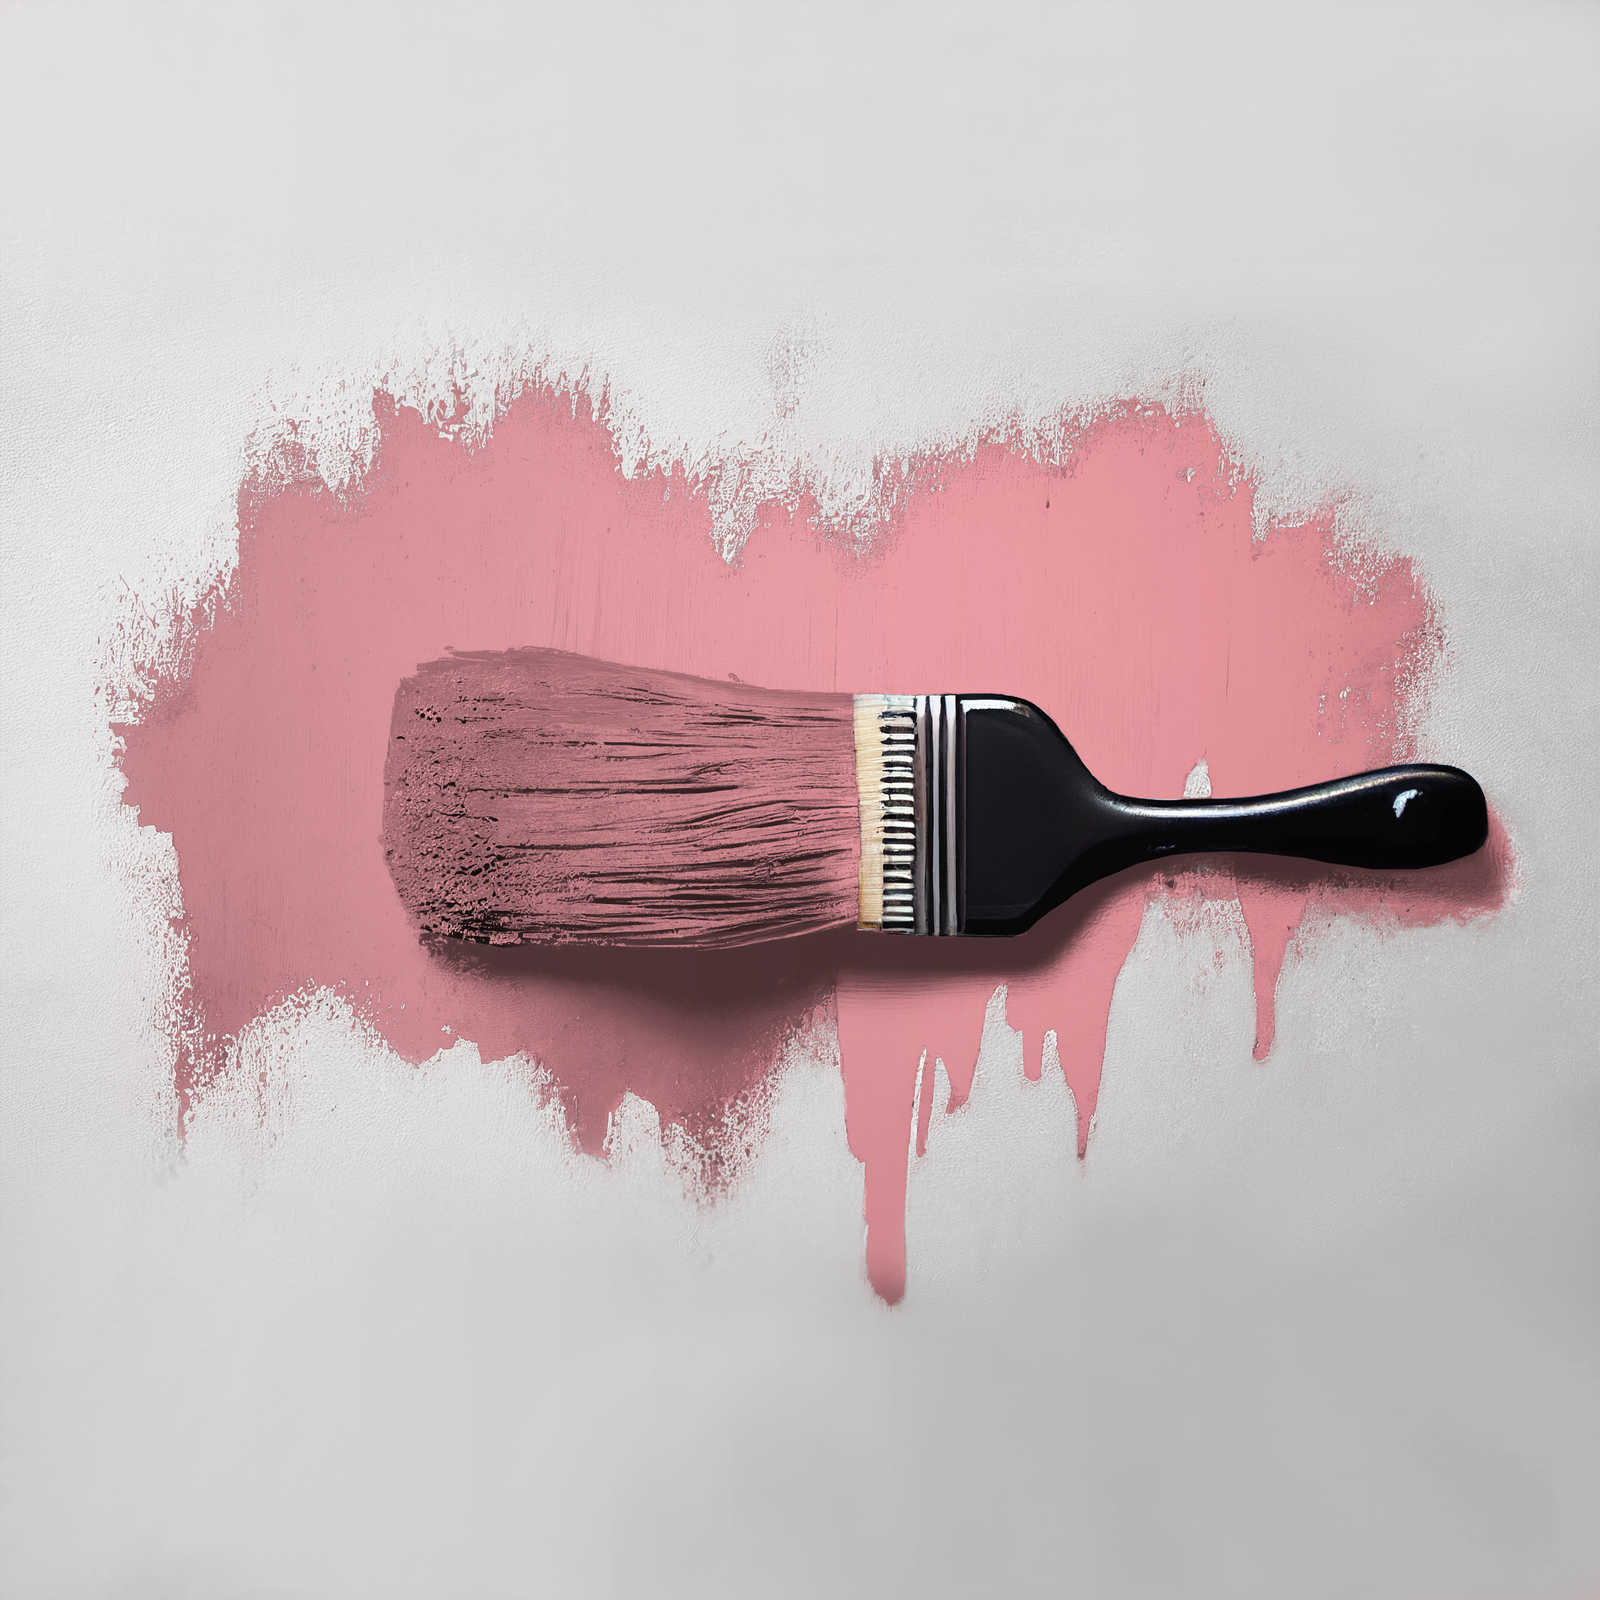             Peinture murale TCK7010 »Masterfully Macaron« en rose vif – 2,5 litres
        